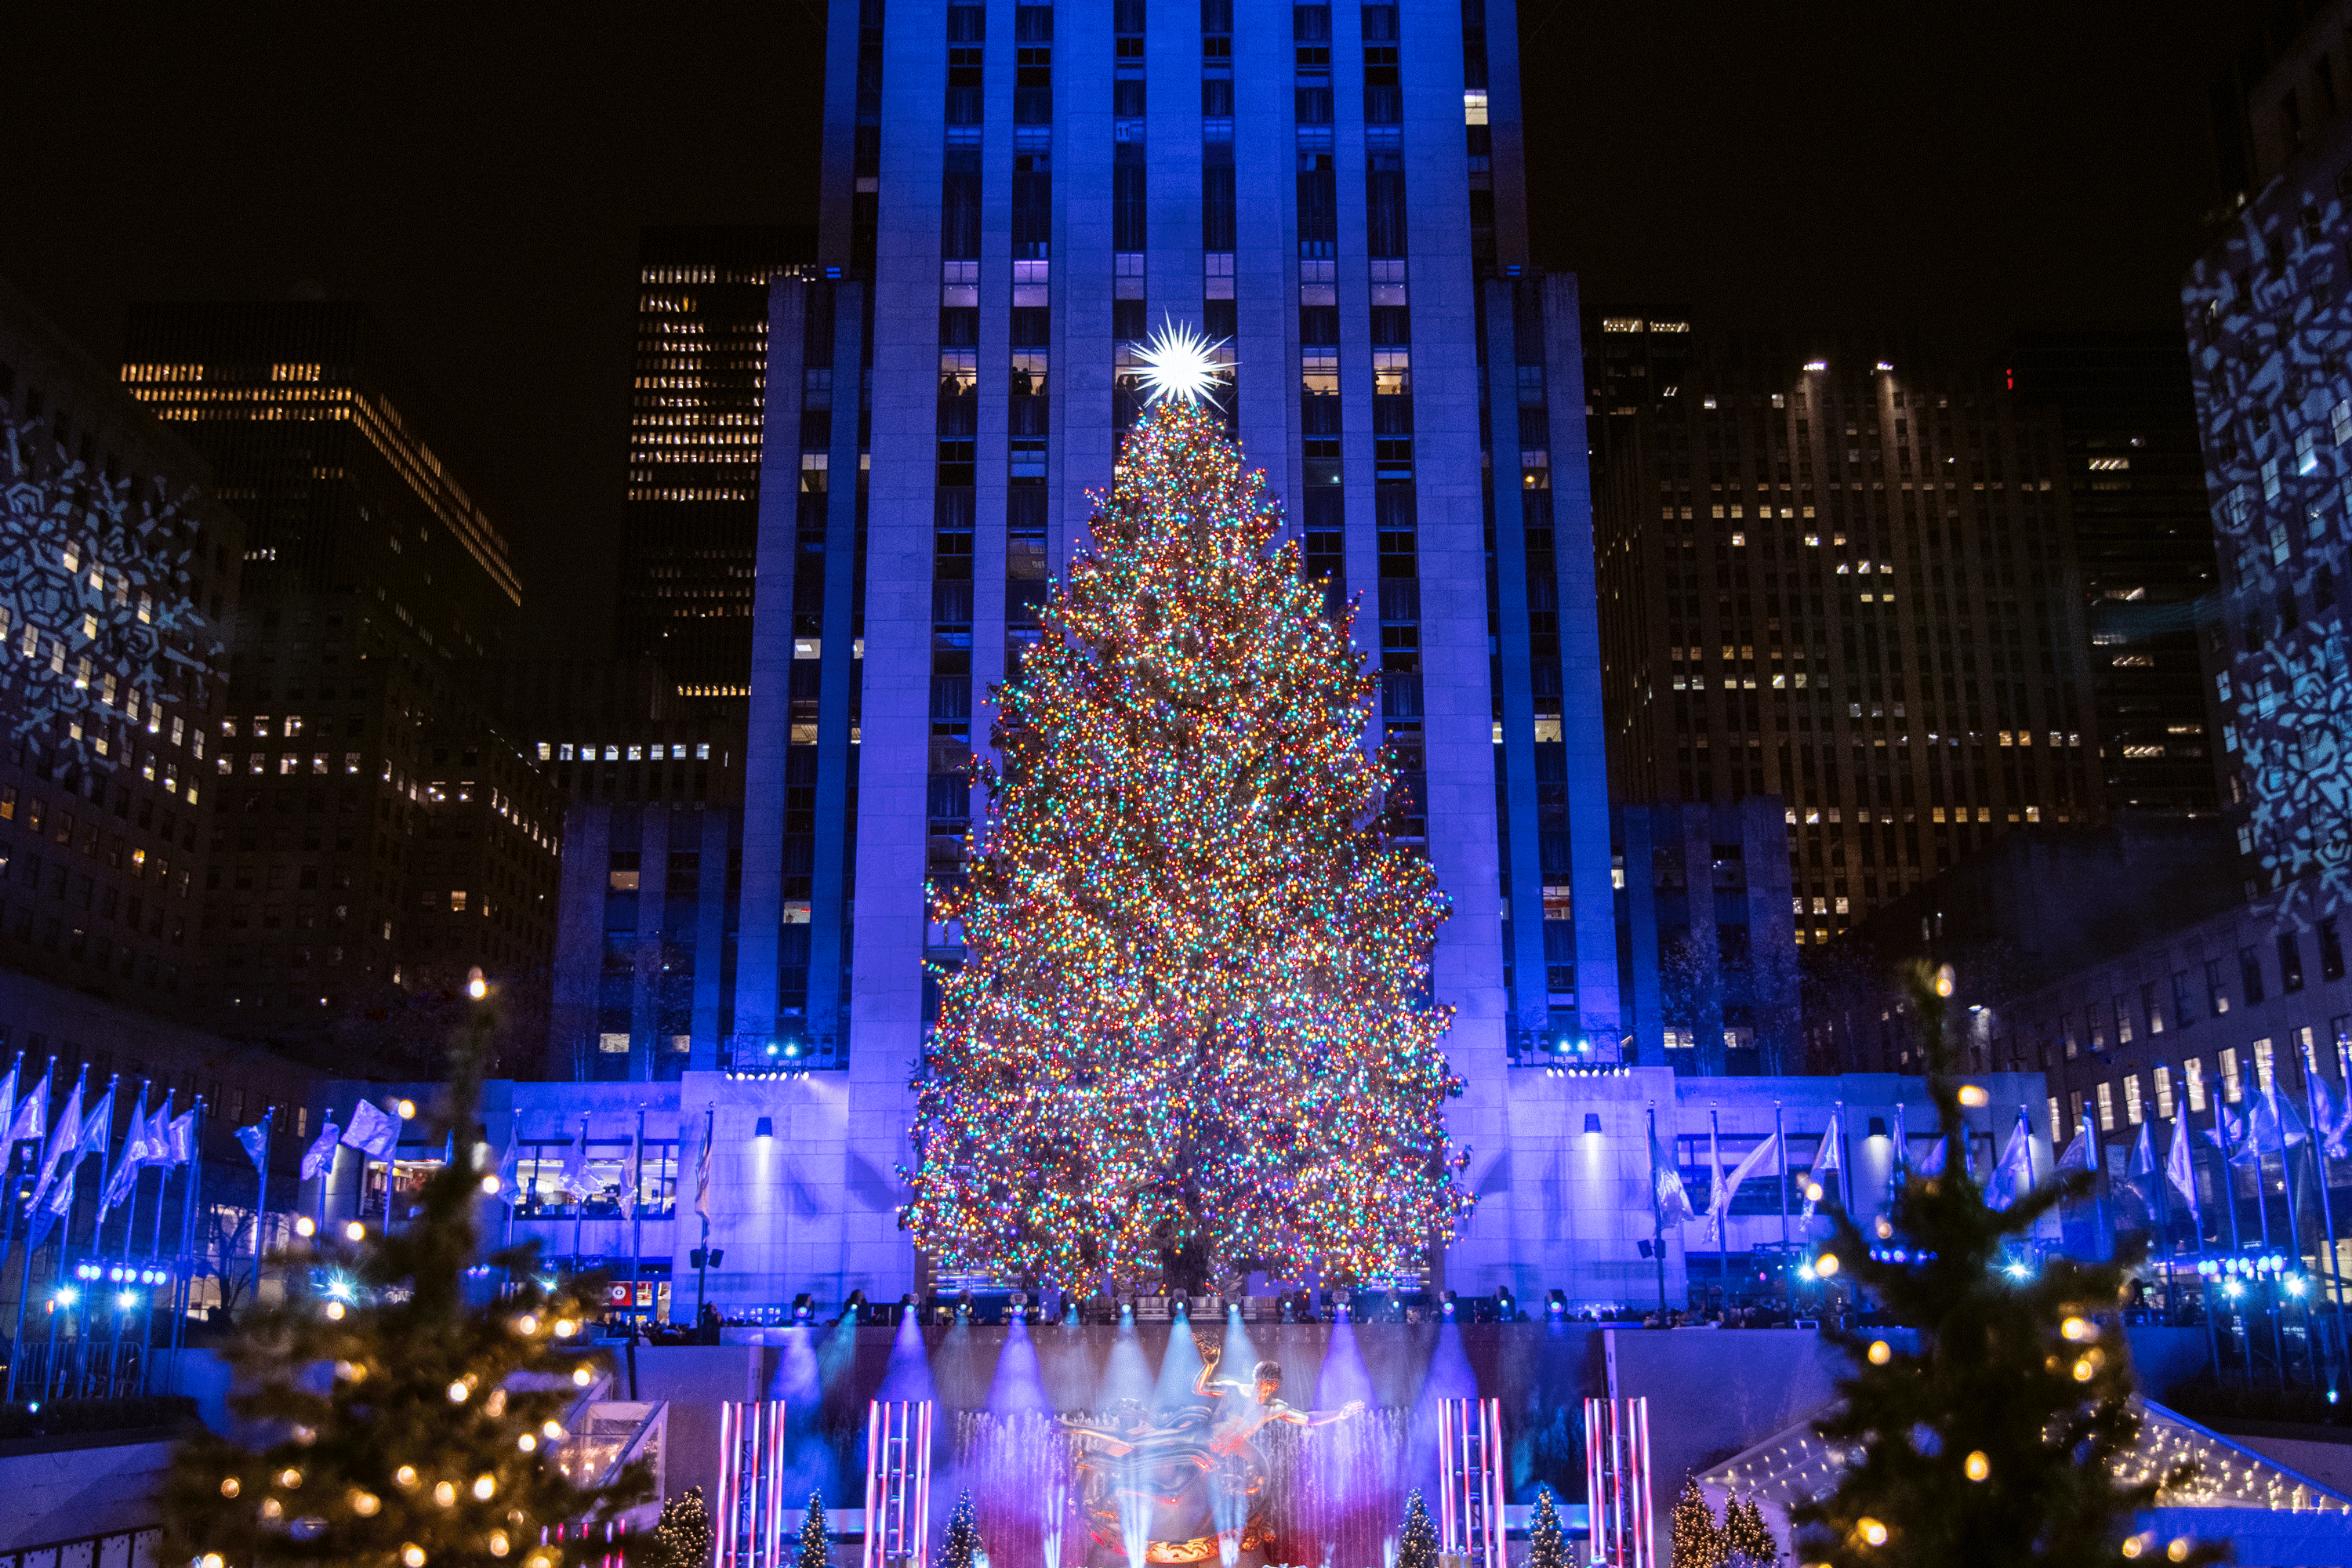 Rockefeller Center Christmas Lit Up at Night